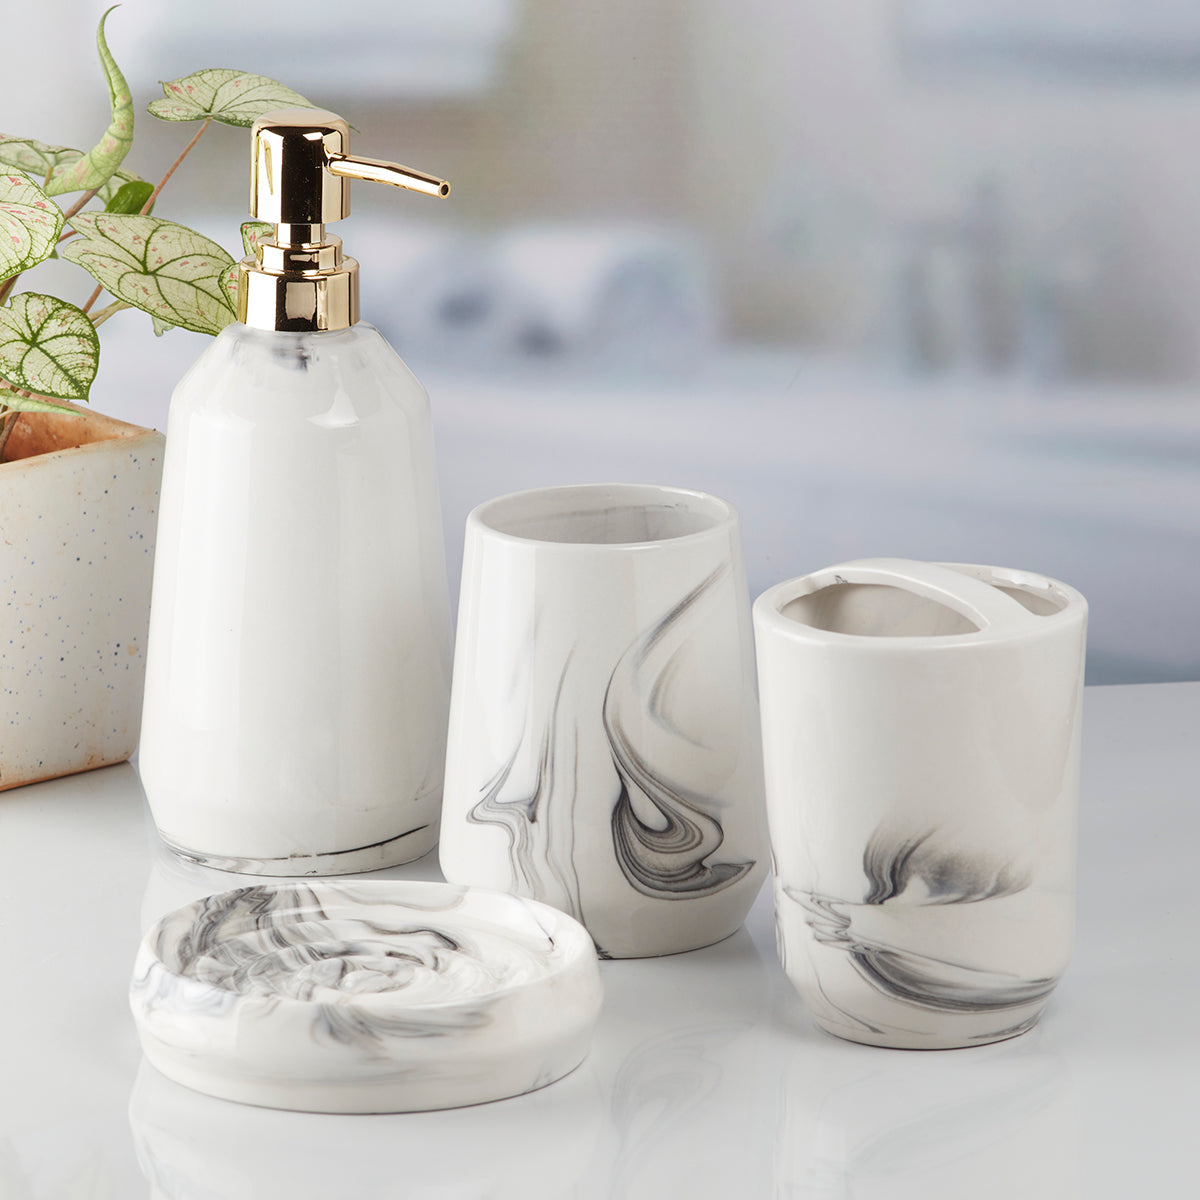 Ceramic Bathroom Accessories Set of 4 Bath Set with Soap Dispenser (7941)